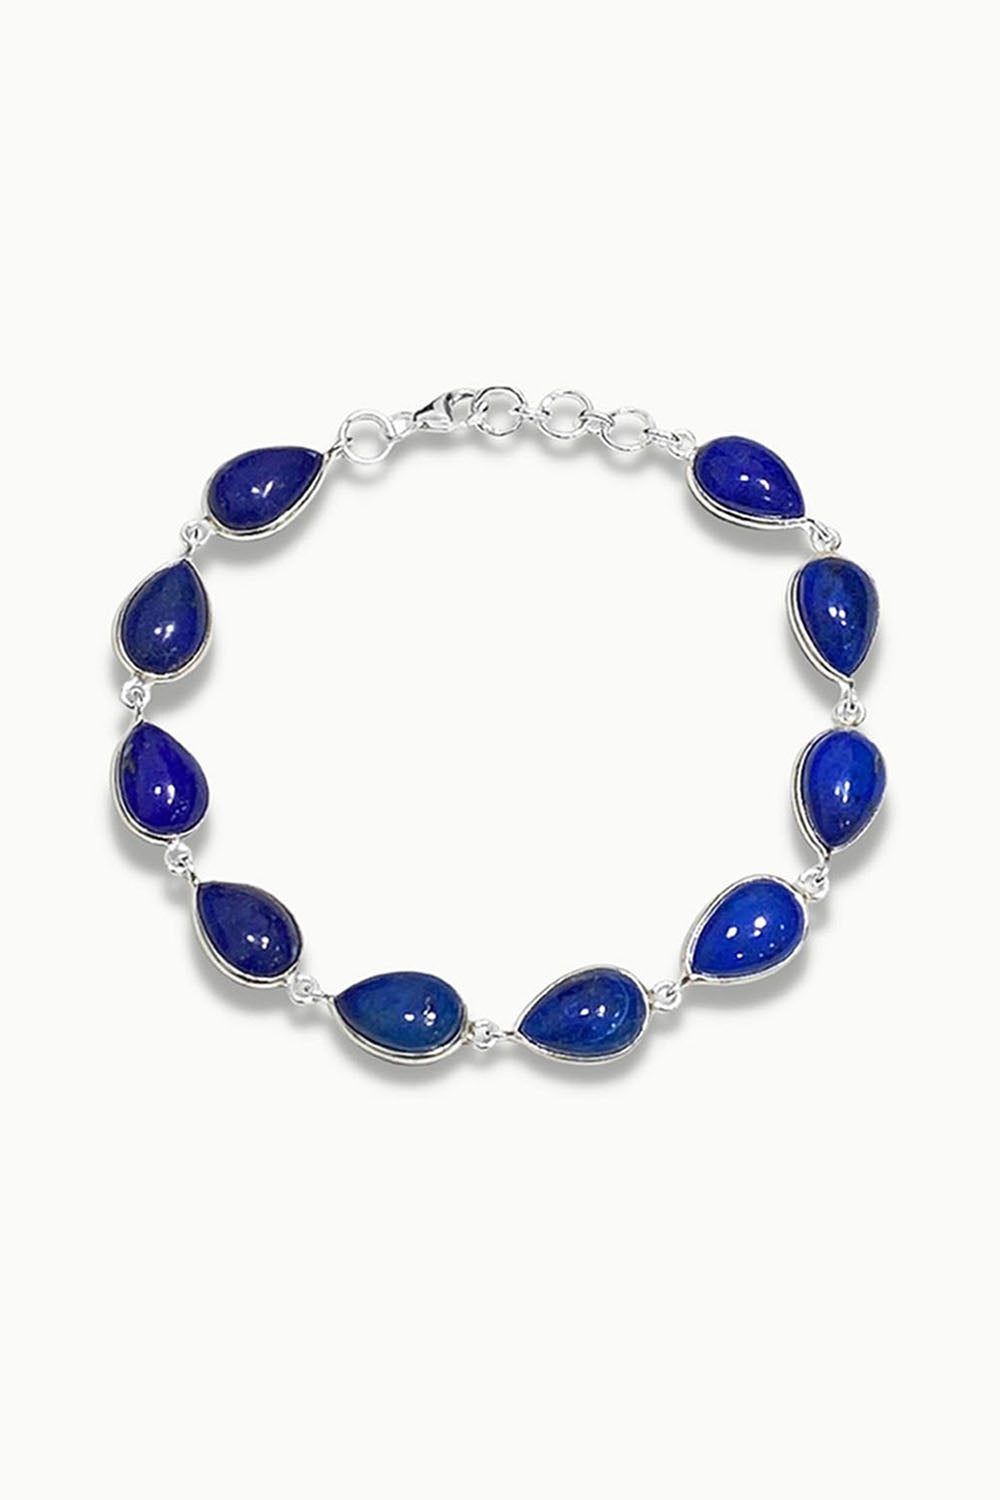 Lapis Lazuli Silver Bracelet - Dew Drops